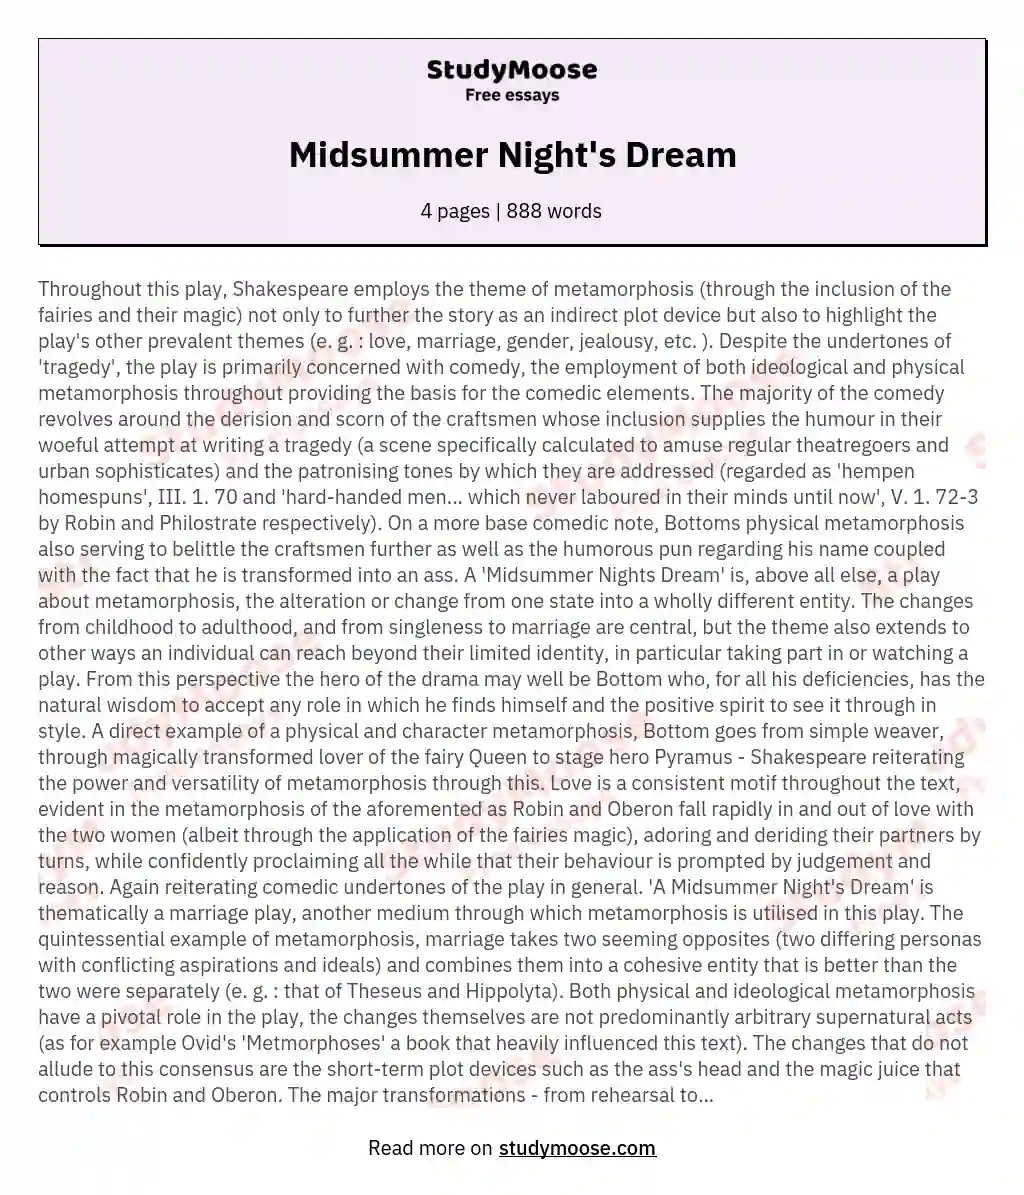 midsummer night's dream essay prompts